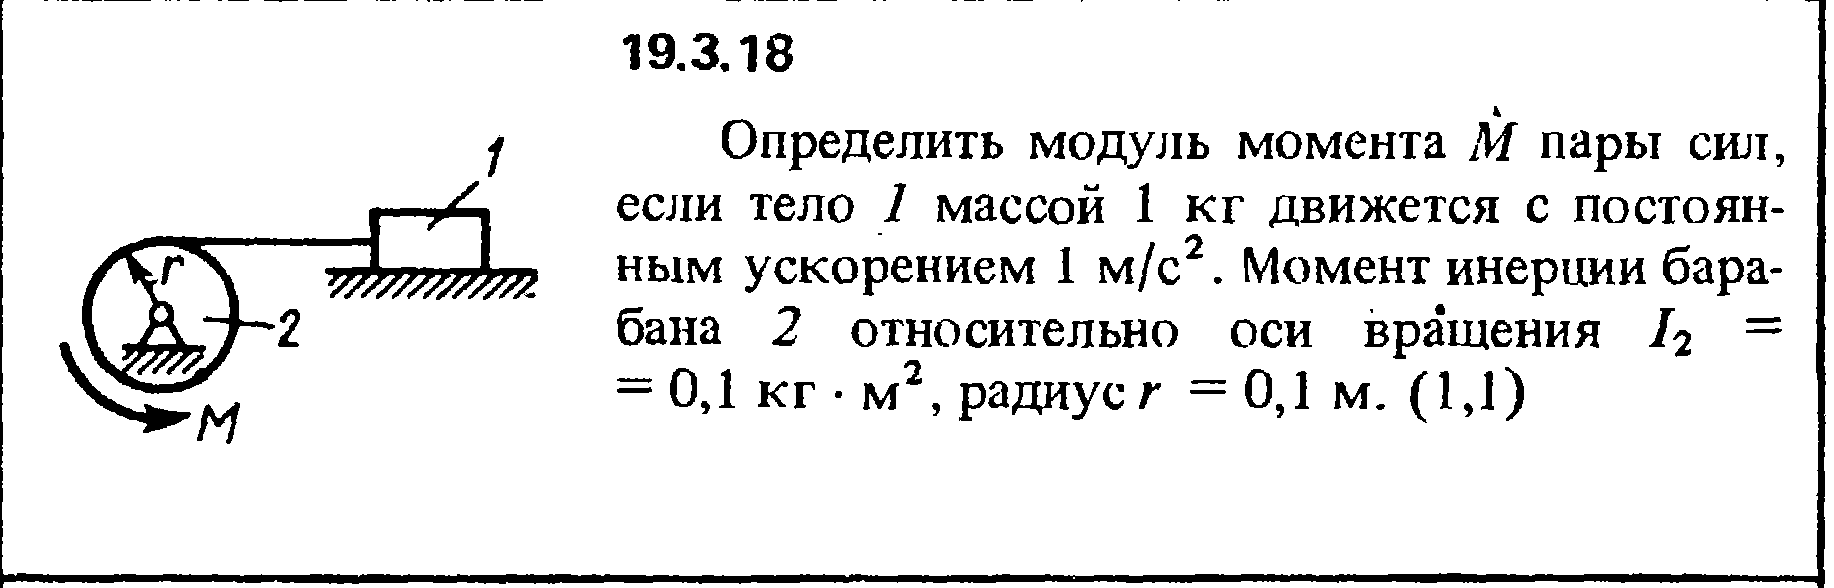 Решение 19.3.18 из сборника (решебника) Кепе О.Е. 1989